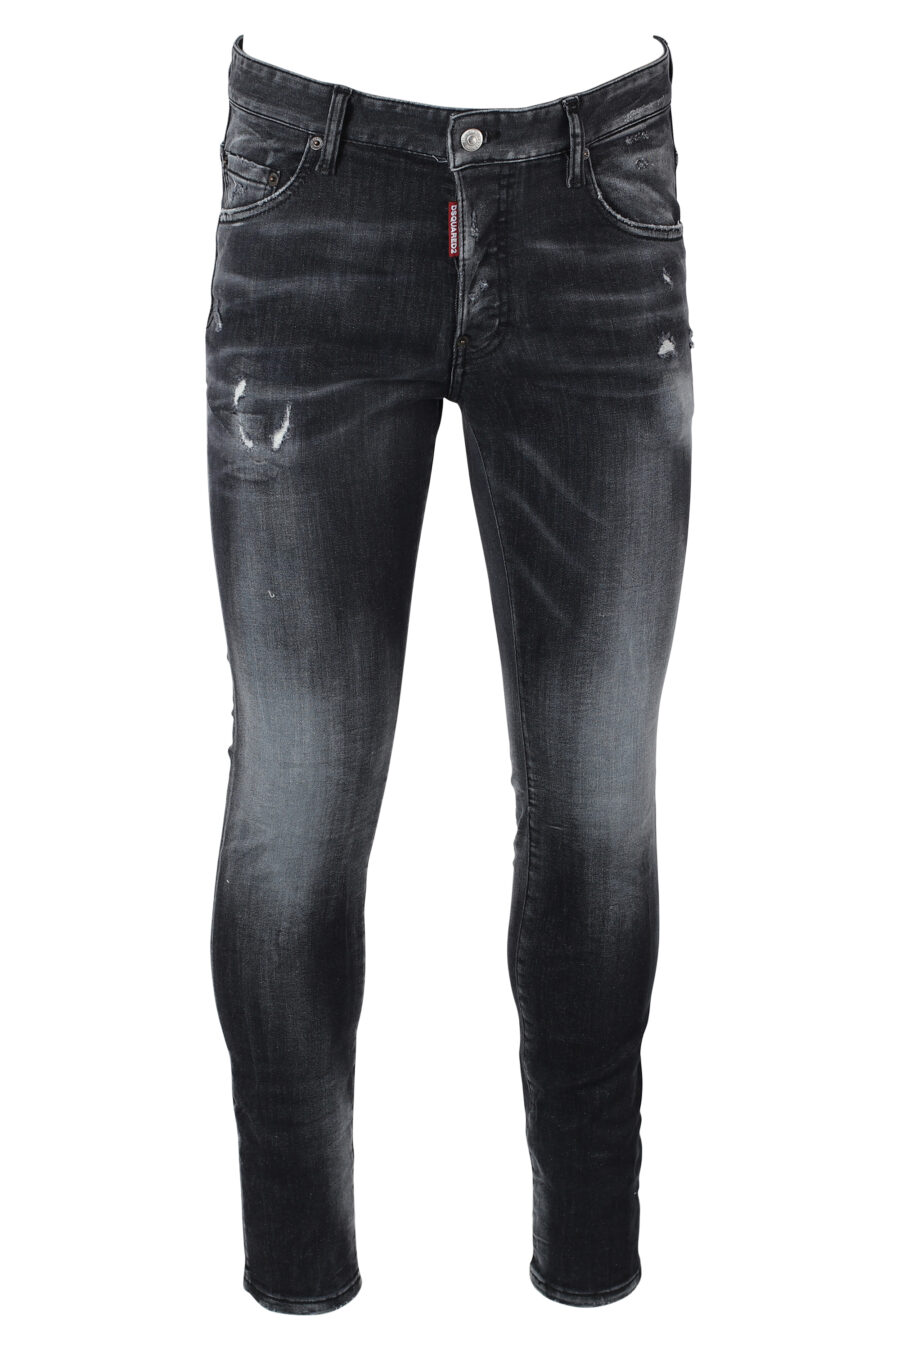 Pantalón vaquero negro semidesgastado "super twinky jean" - IMG 9958